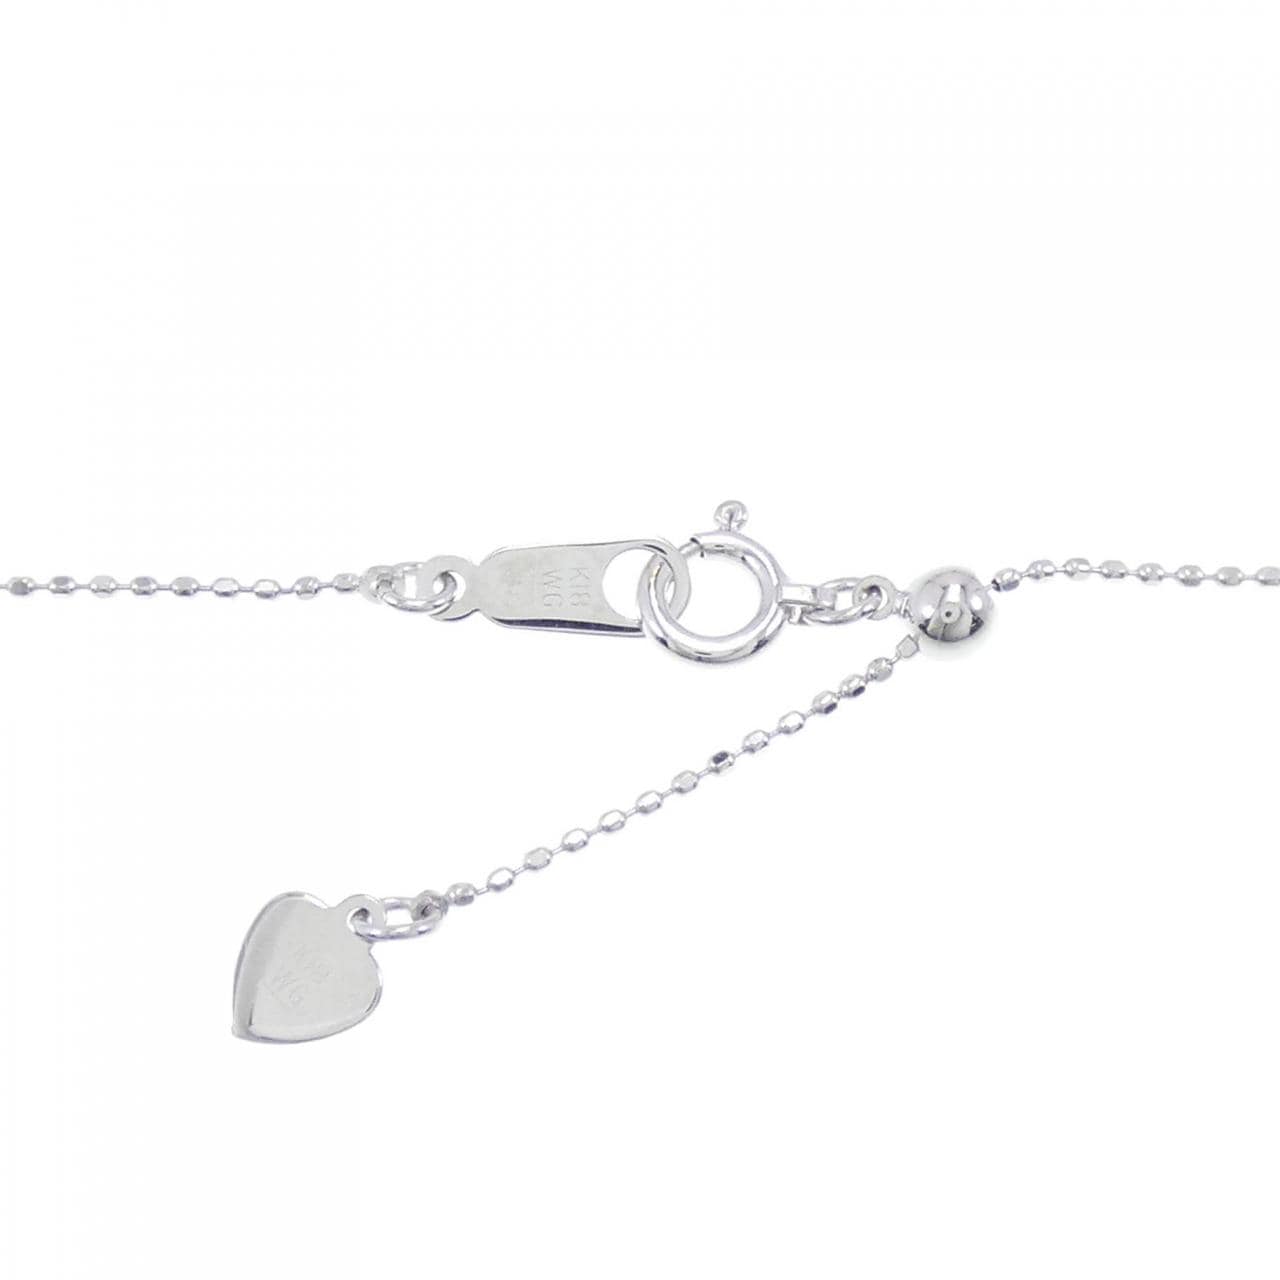 K18WG sapphire necklace 0.63CT